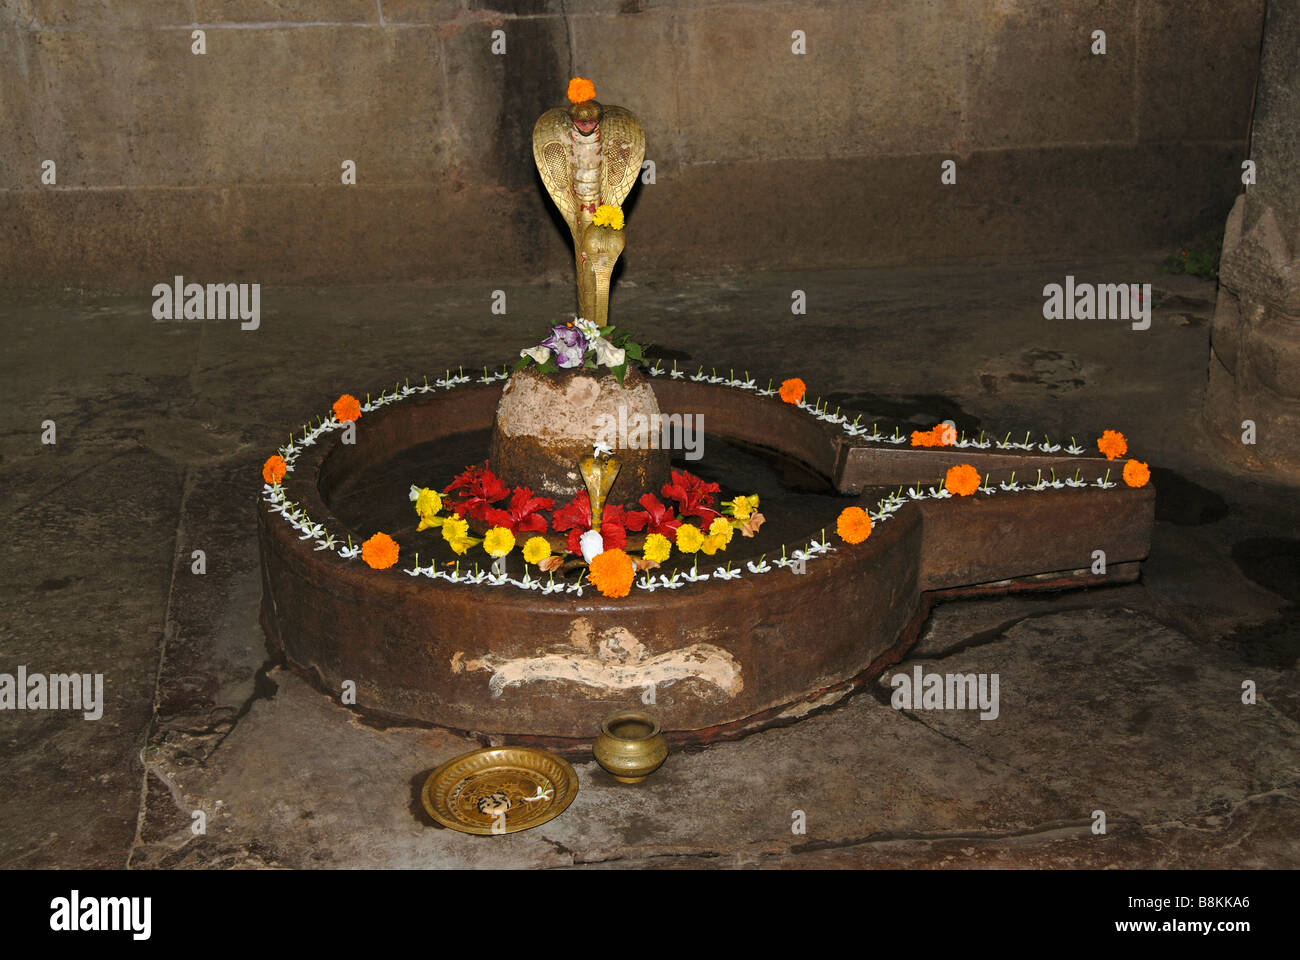 Siddheshwar temple- Shiva-lingam in the main shrine of the temple in worship. Orissa, Bhubaneshwar, India. Stock Photo